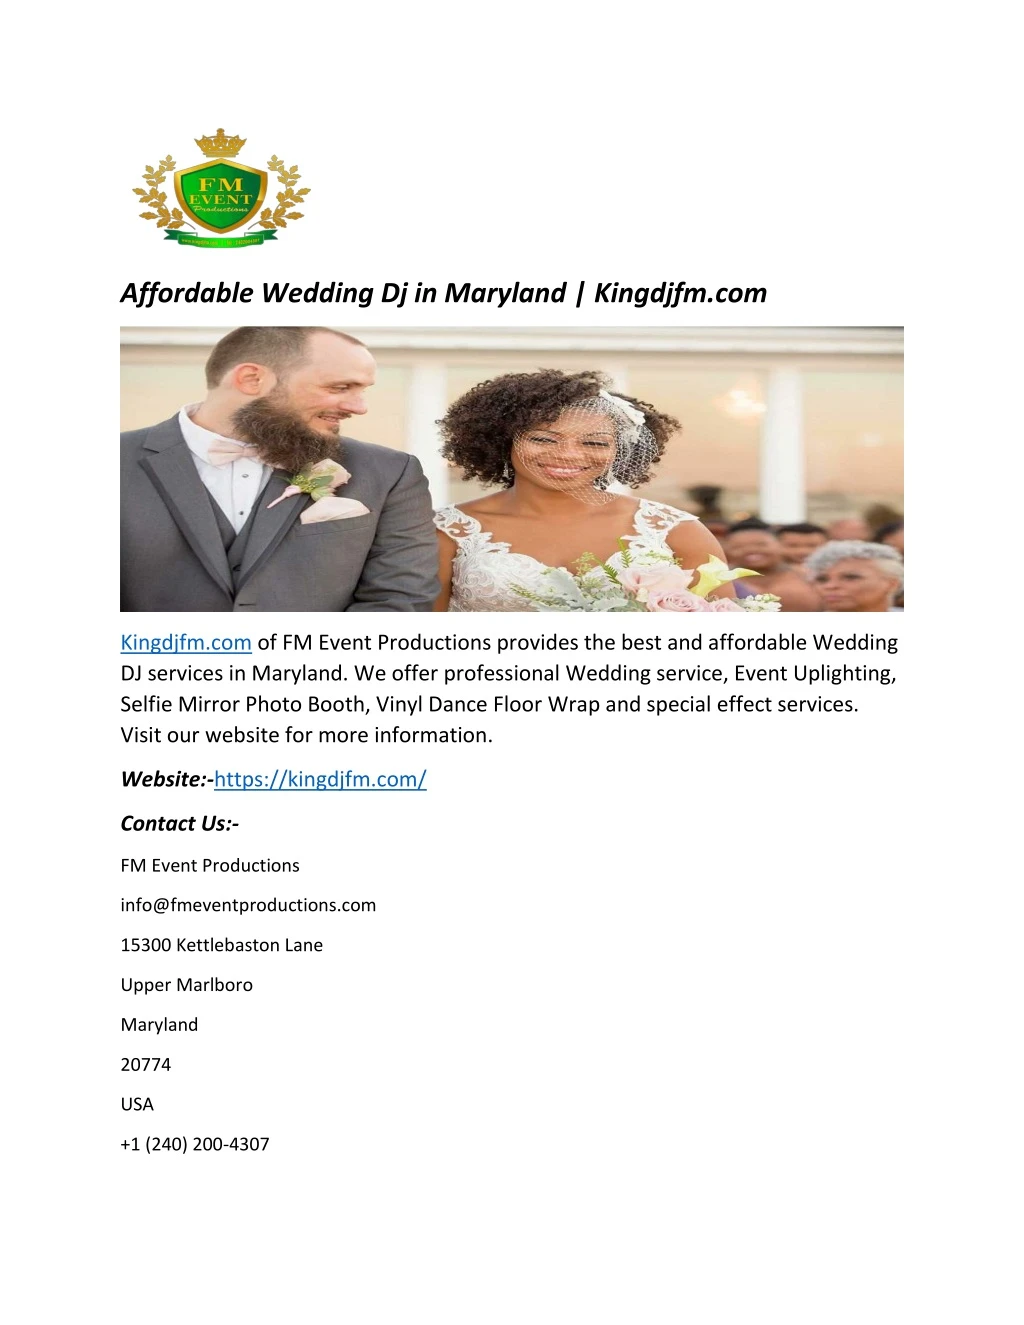 affordable wedding dj in maryland kingdjfm com